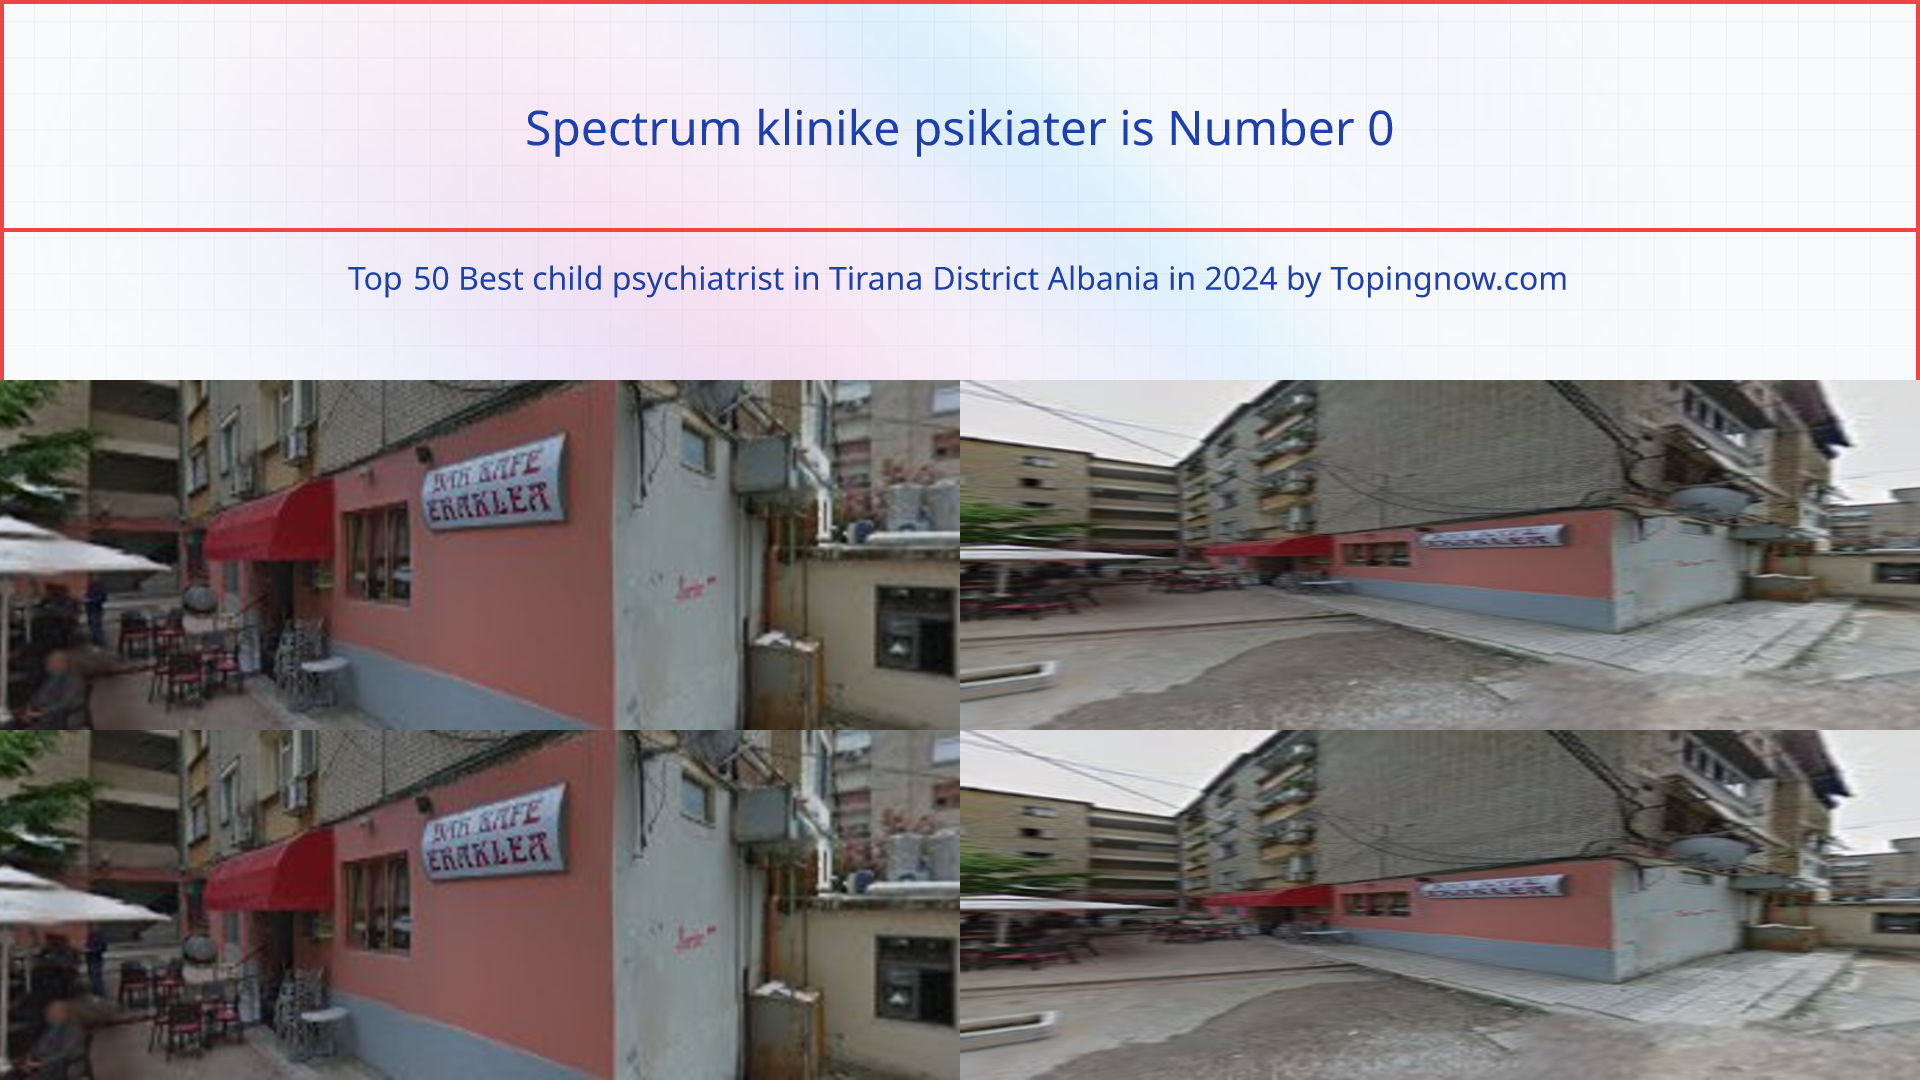 Spectrum klinike psikiater: Top 50 Best child psychiatrist in Tirana District Albania in 2024